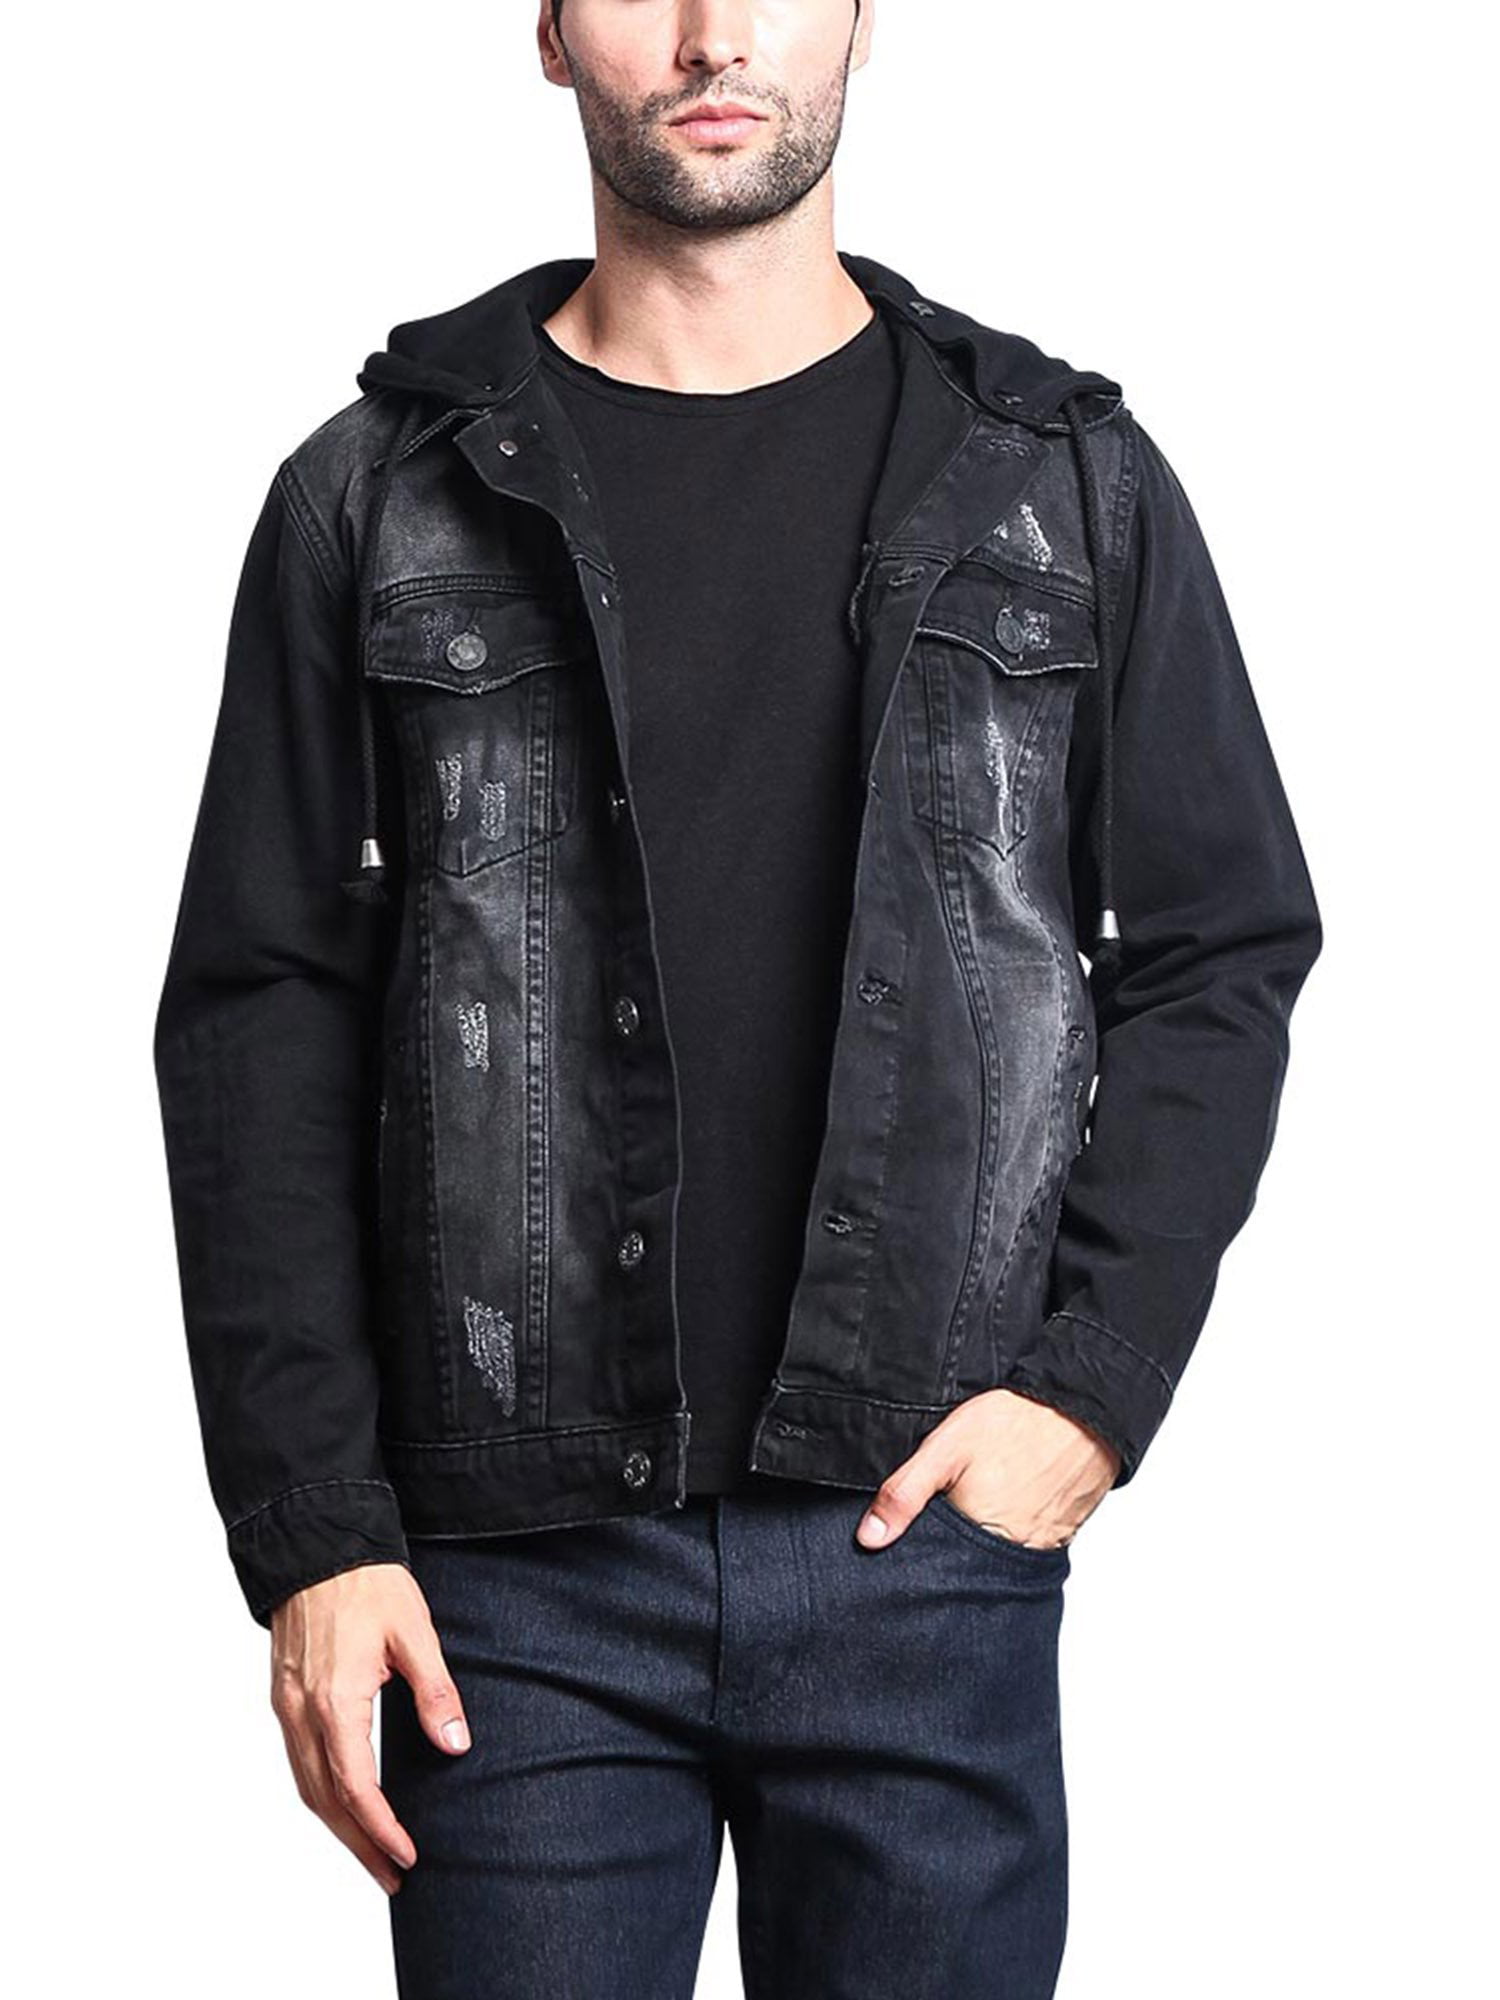 cotton Men black denim jacket hoodie For Mens at Rs 1100/piece in Mumbai